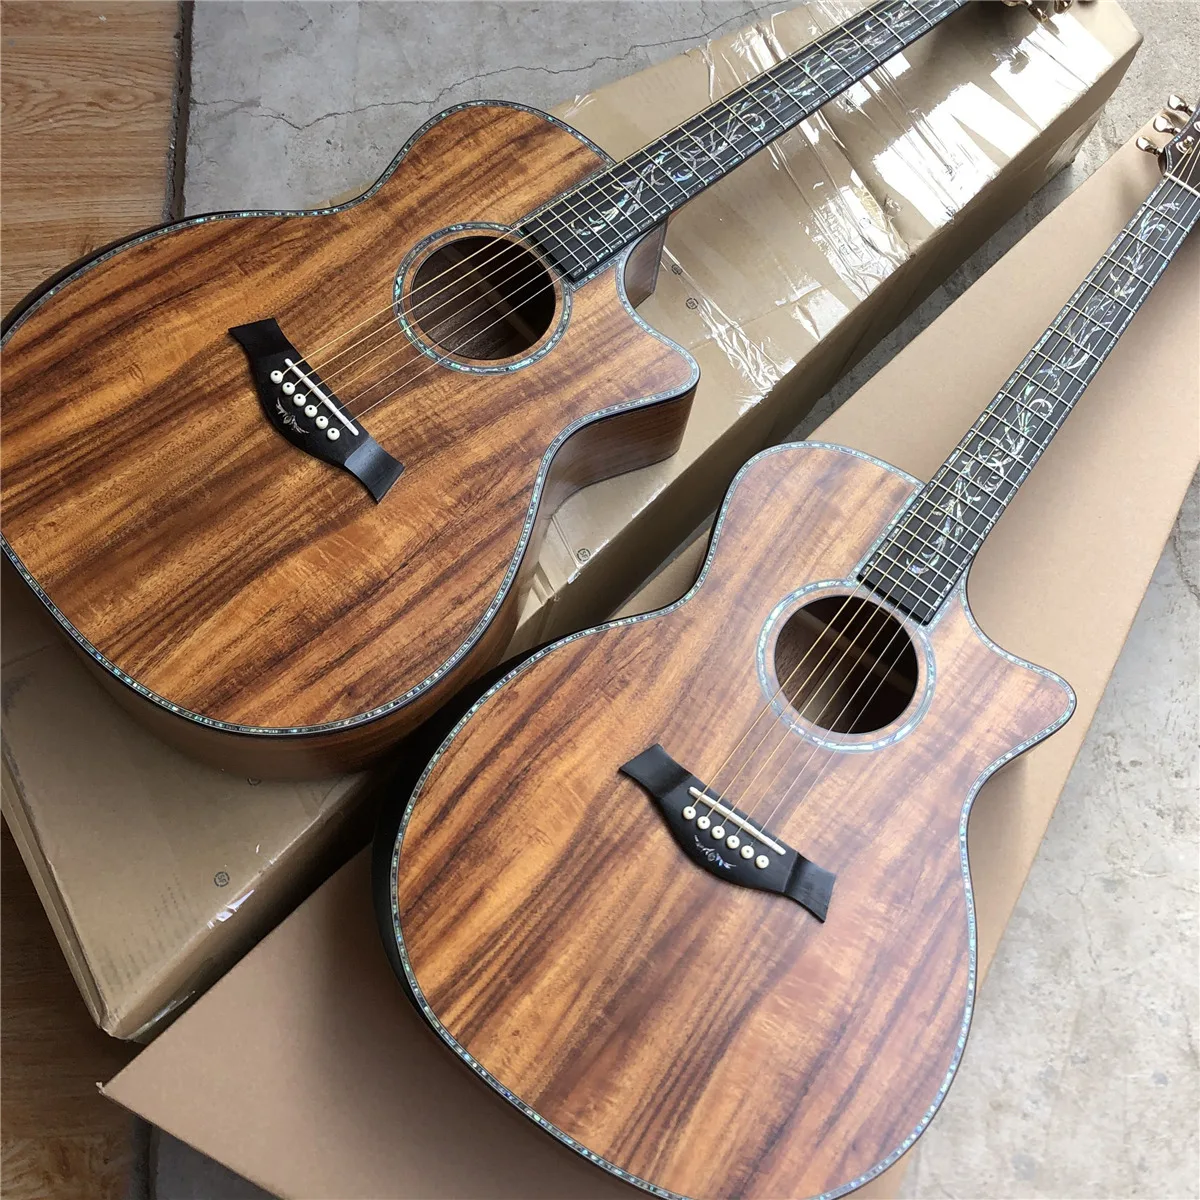 

Real Abalone Matt Finished Full Koa Wood PS14 Acoustic Guitar 41 Inch Arm Rest Body Ebony Fingerboard